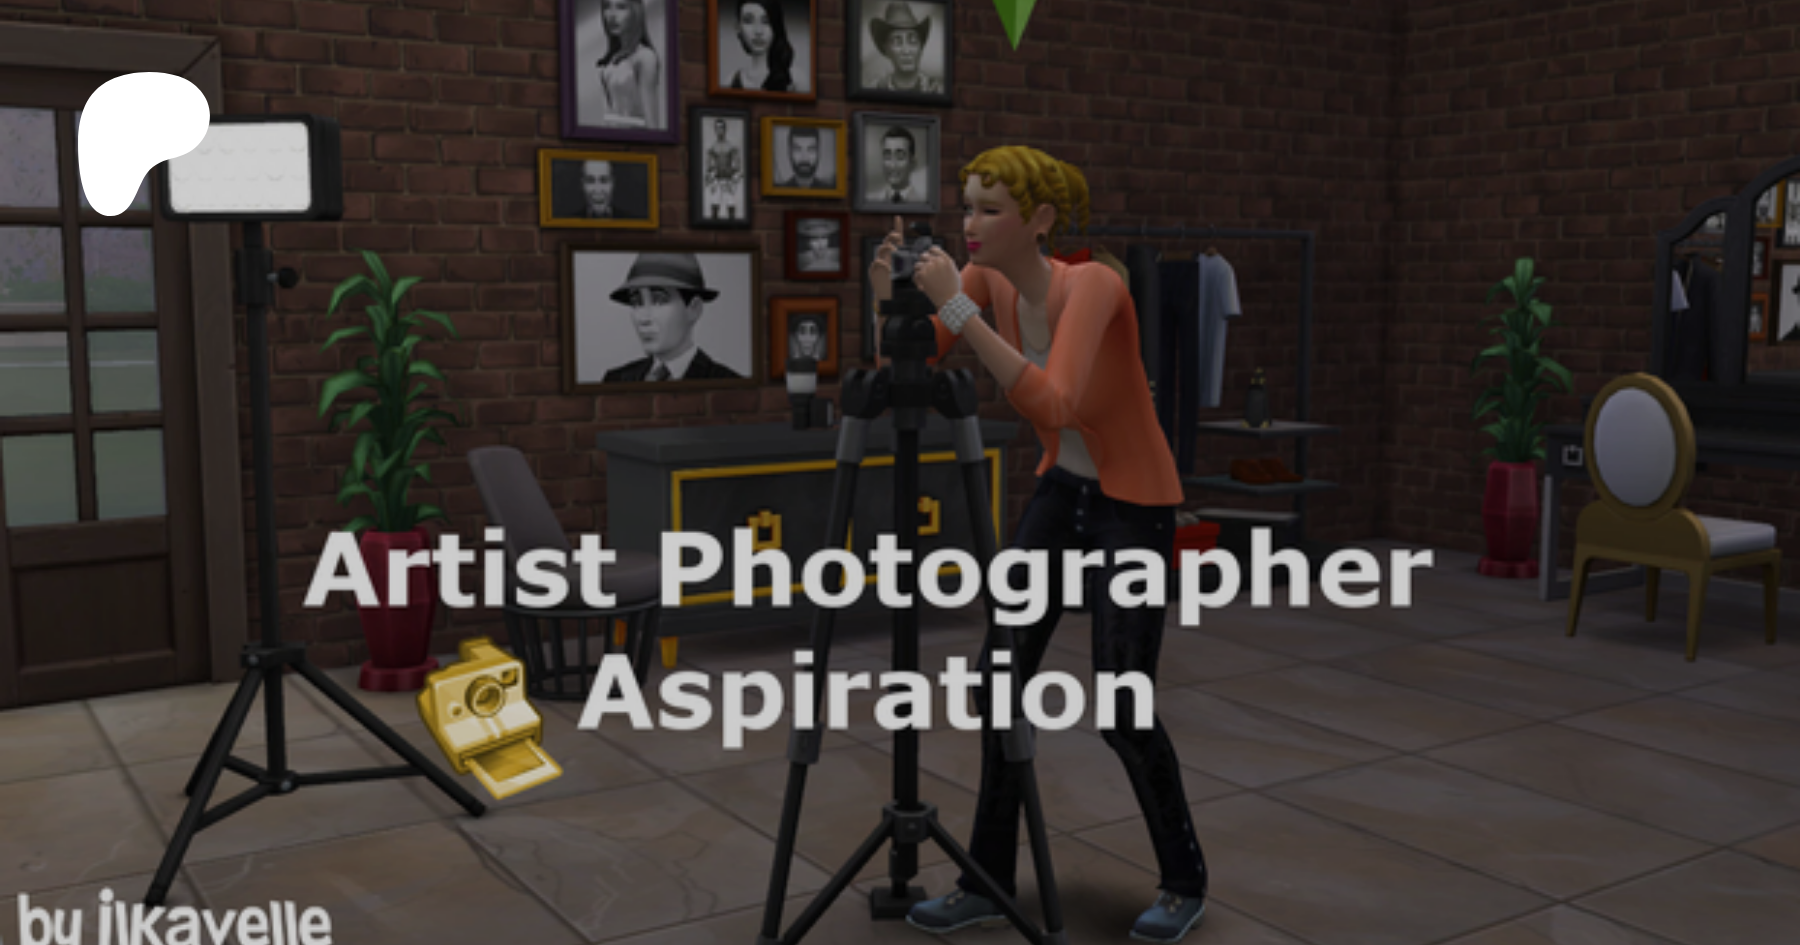 The Sims 4 Moschino Stuff: Creating a Photo Studio